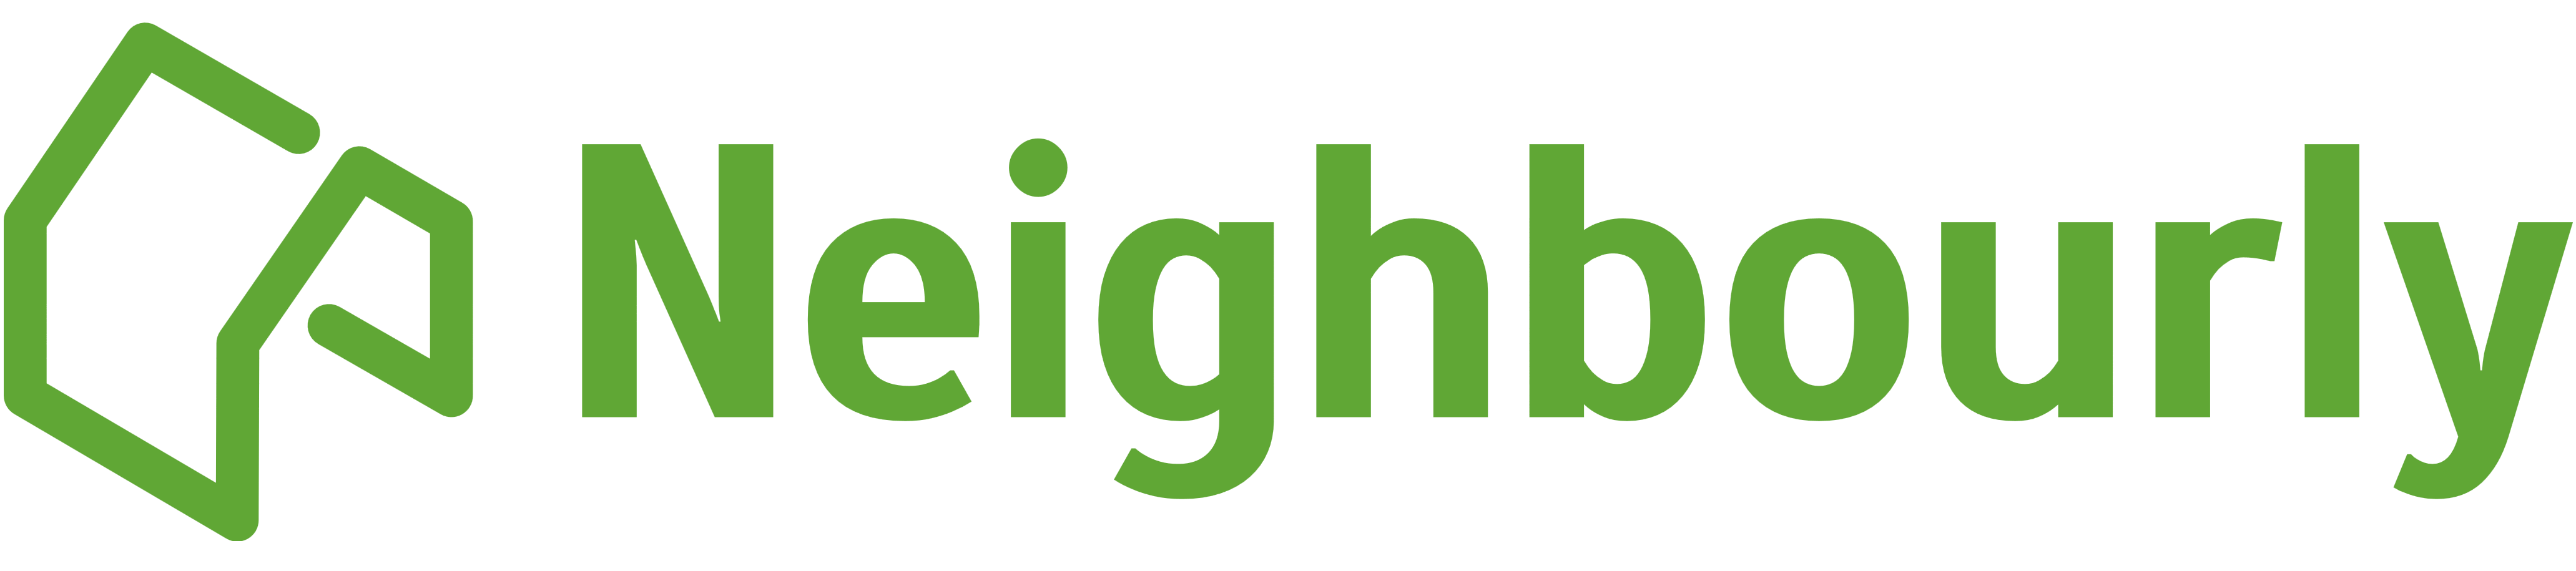 Neighbourly logo, logotype